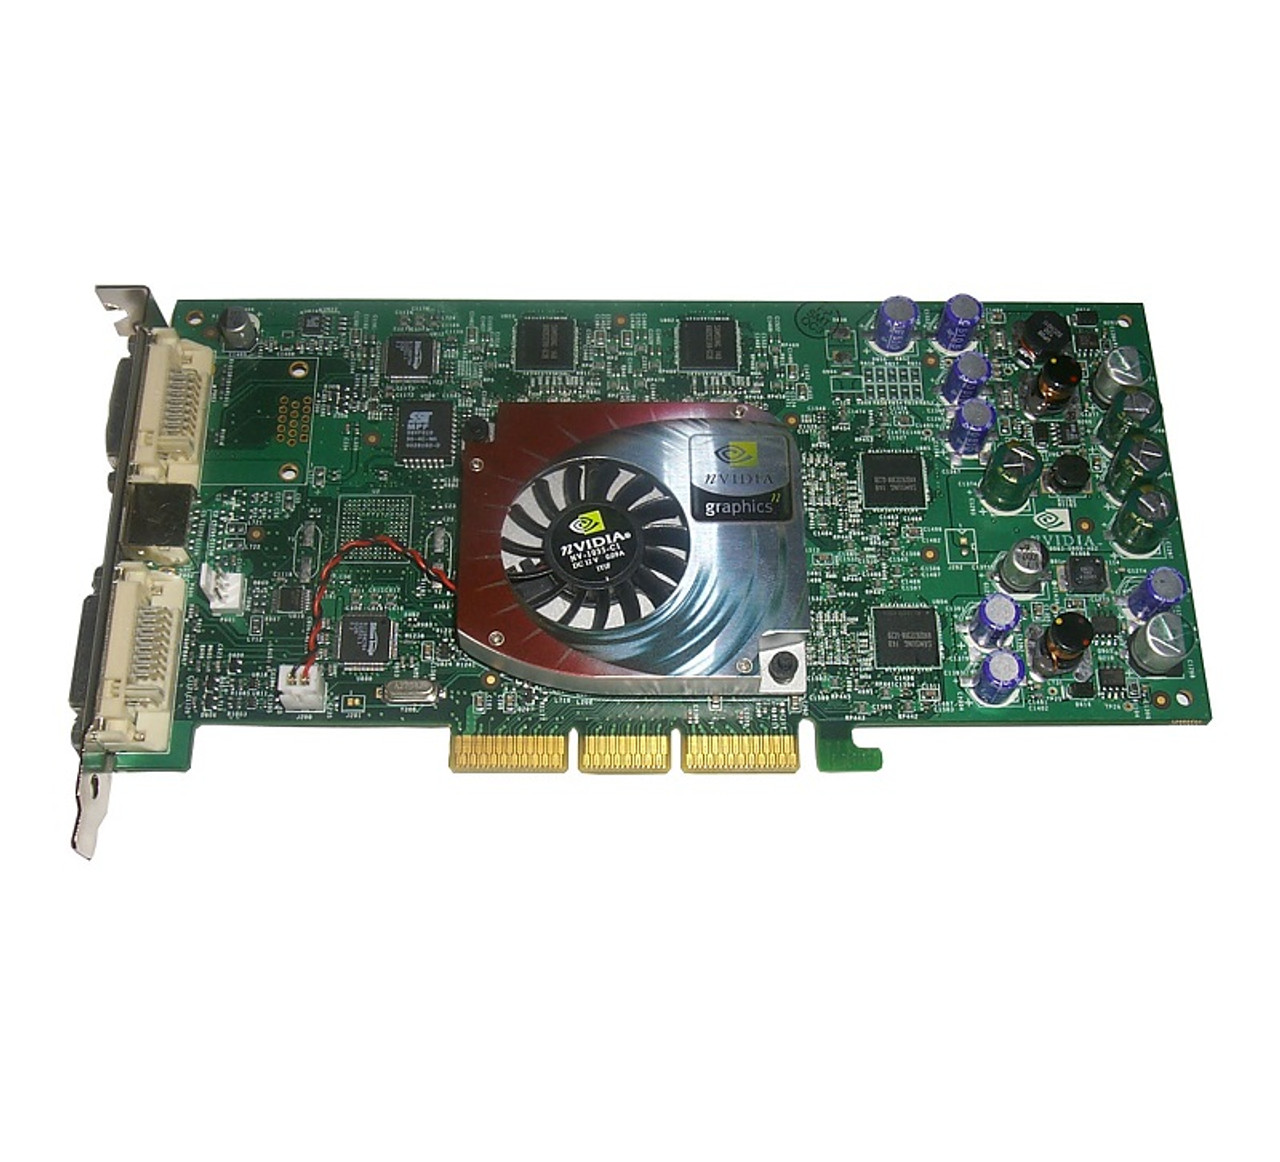 310477-B21 - HP Nvidia Quadro4 380XGL AGP 8x 64MB VGA/DVI/TV-Out Video Graphics Card for Workstations